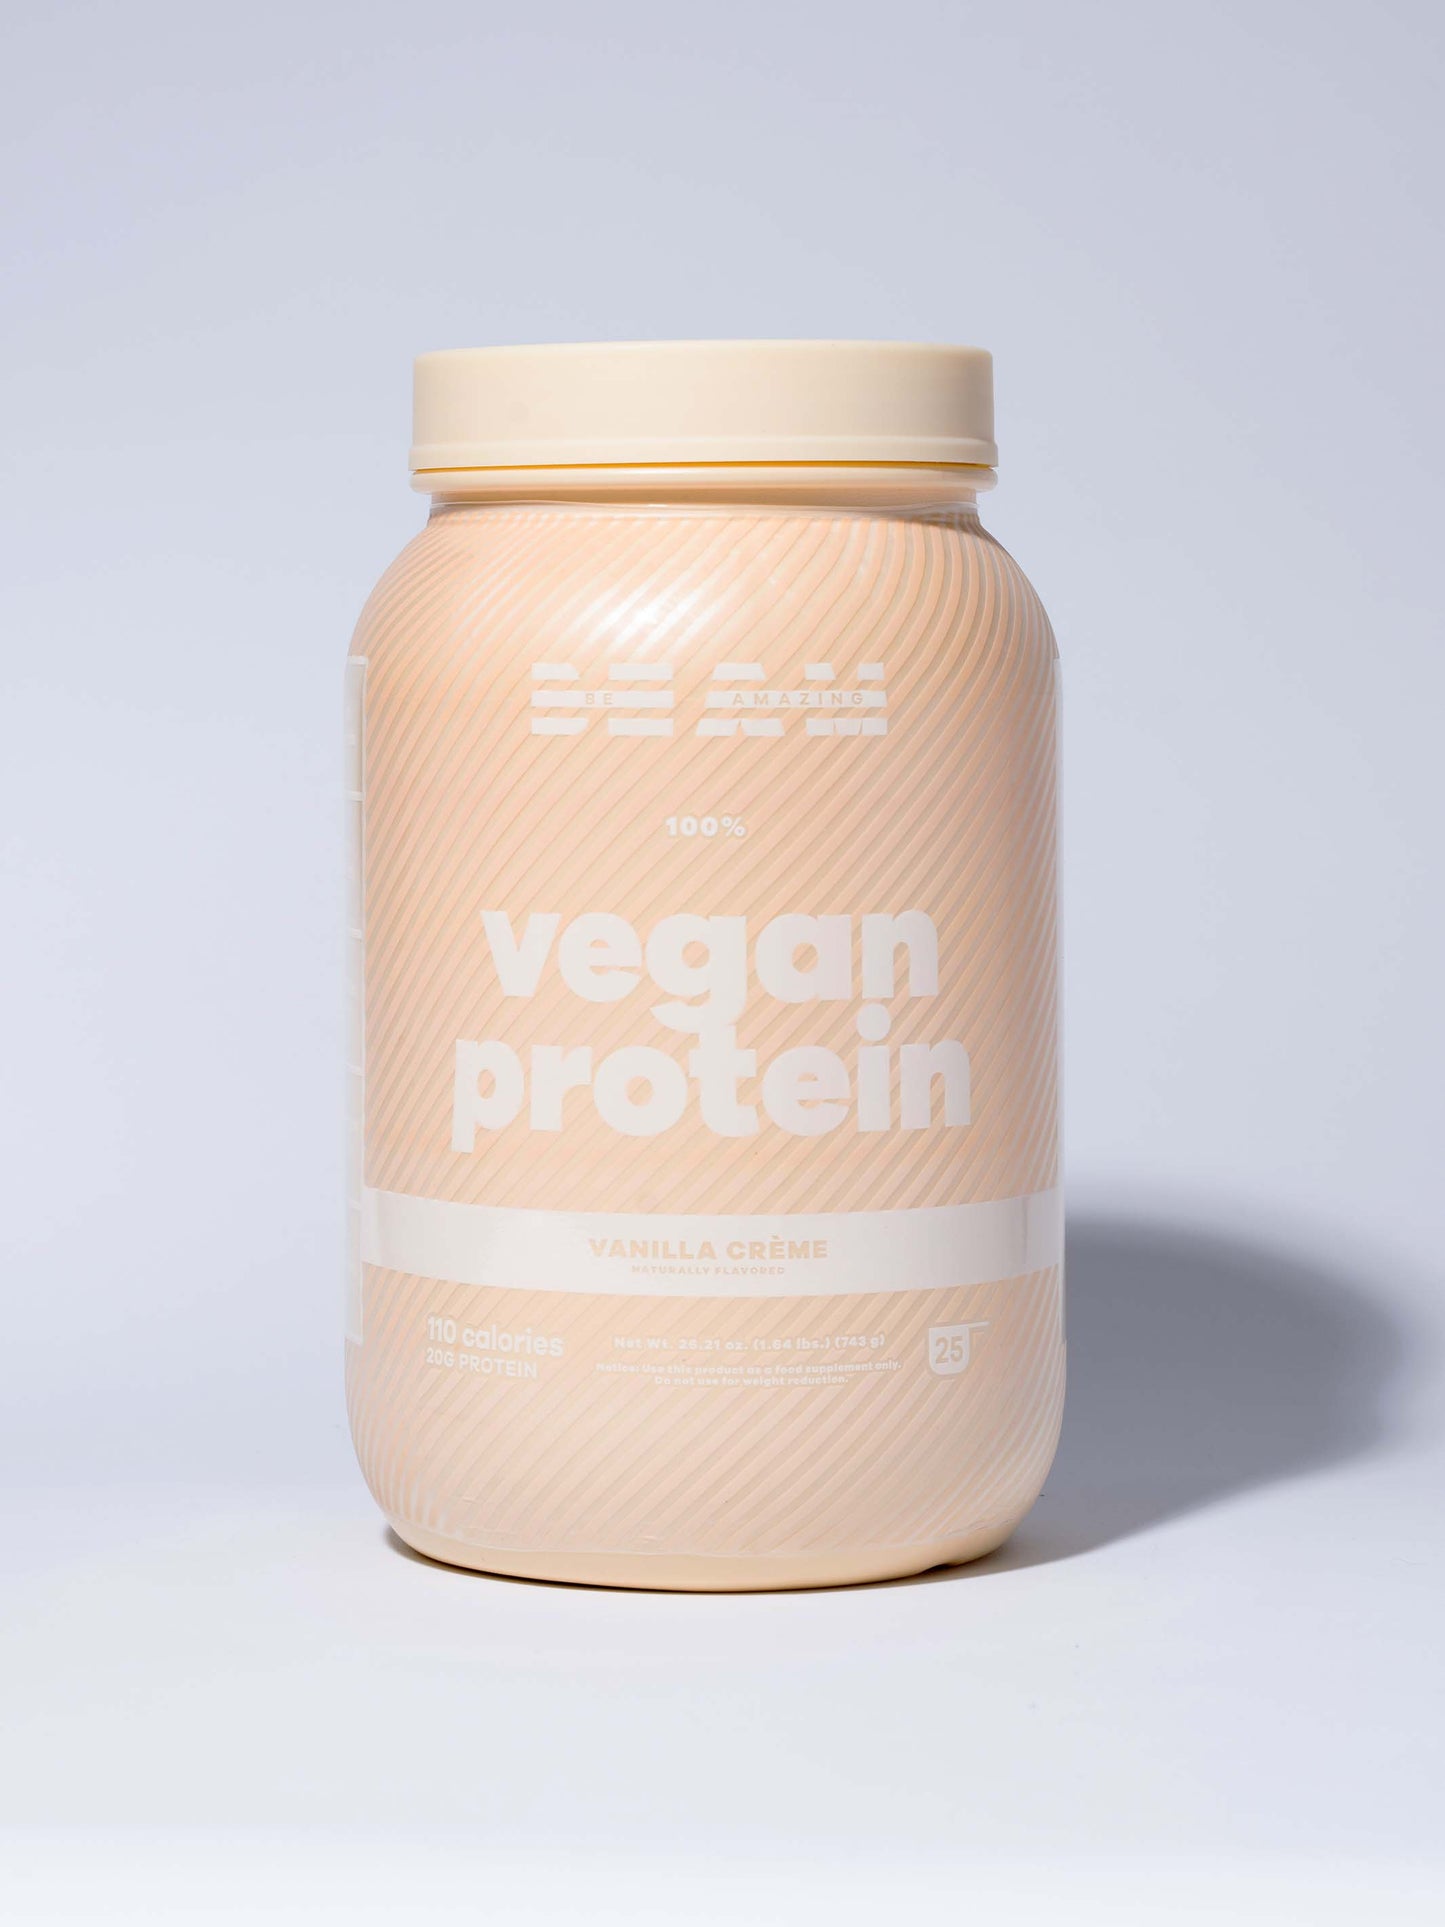 vegan protein